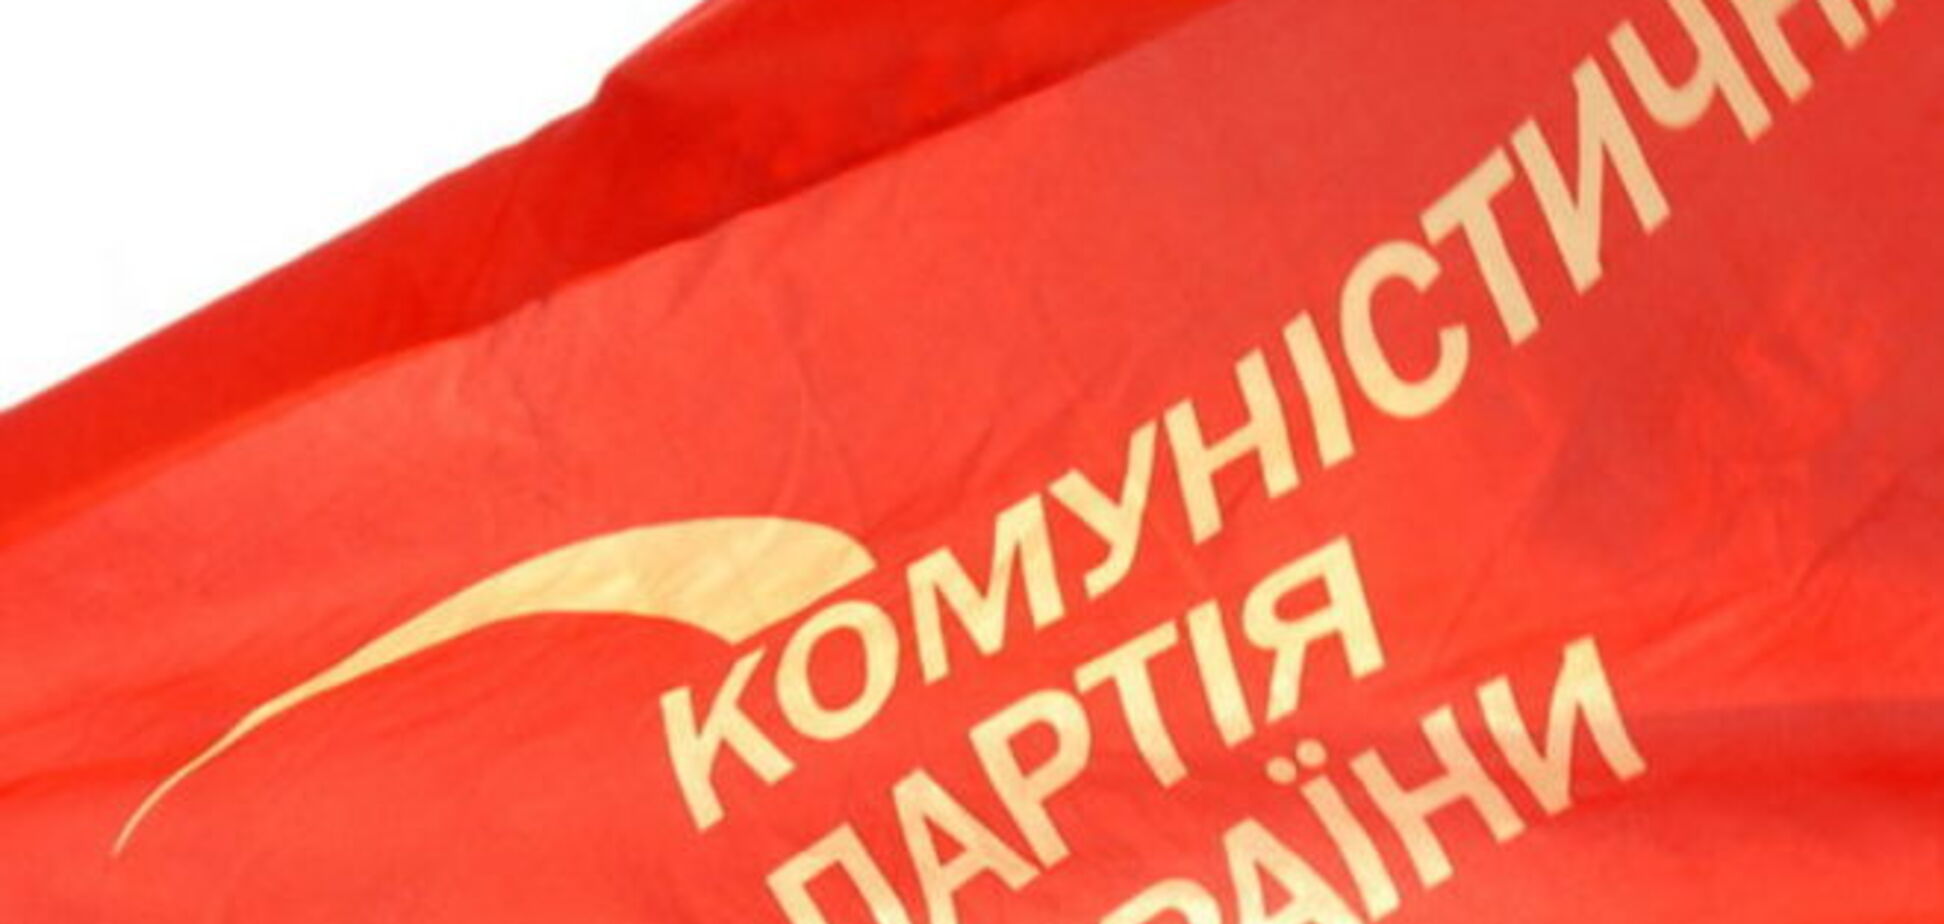 Копатько: КПУ зможе пройти в парламент восьмого скликання